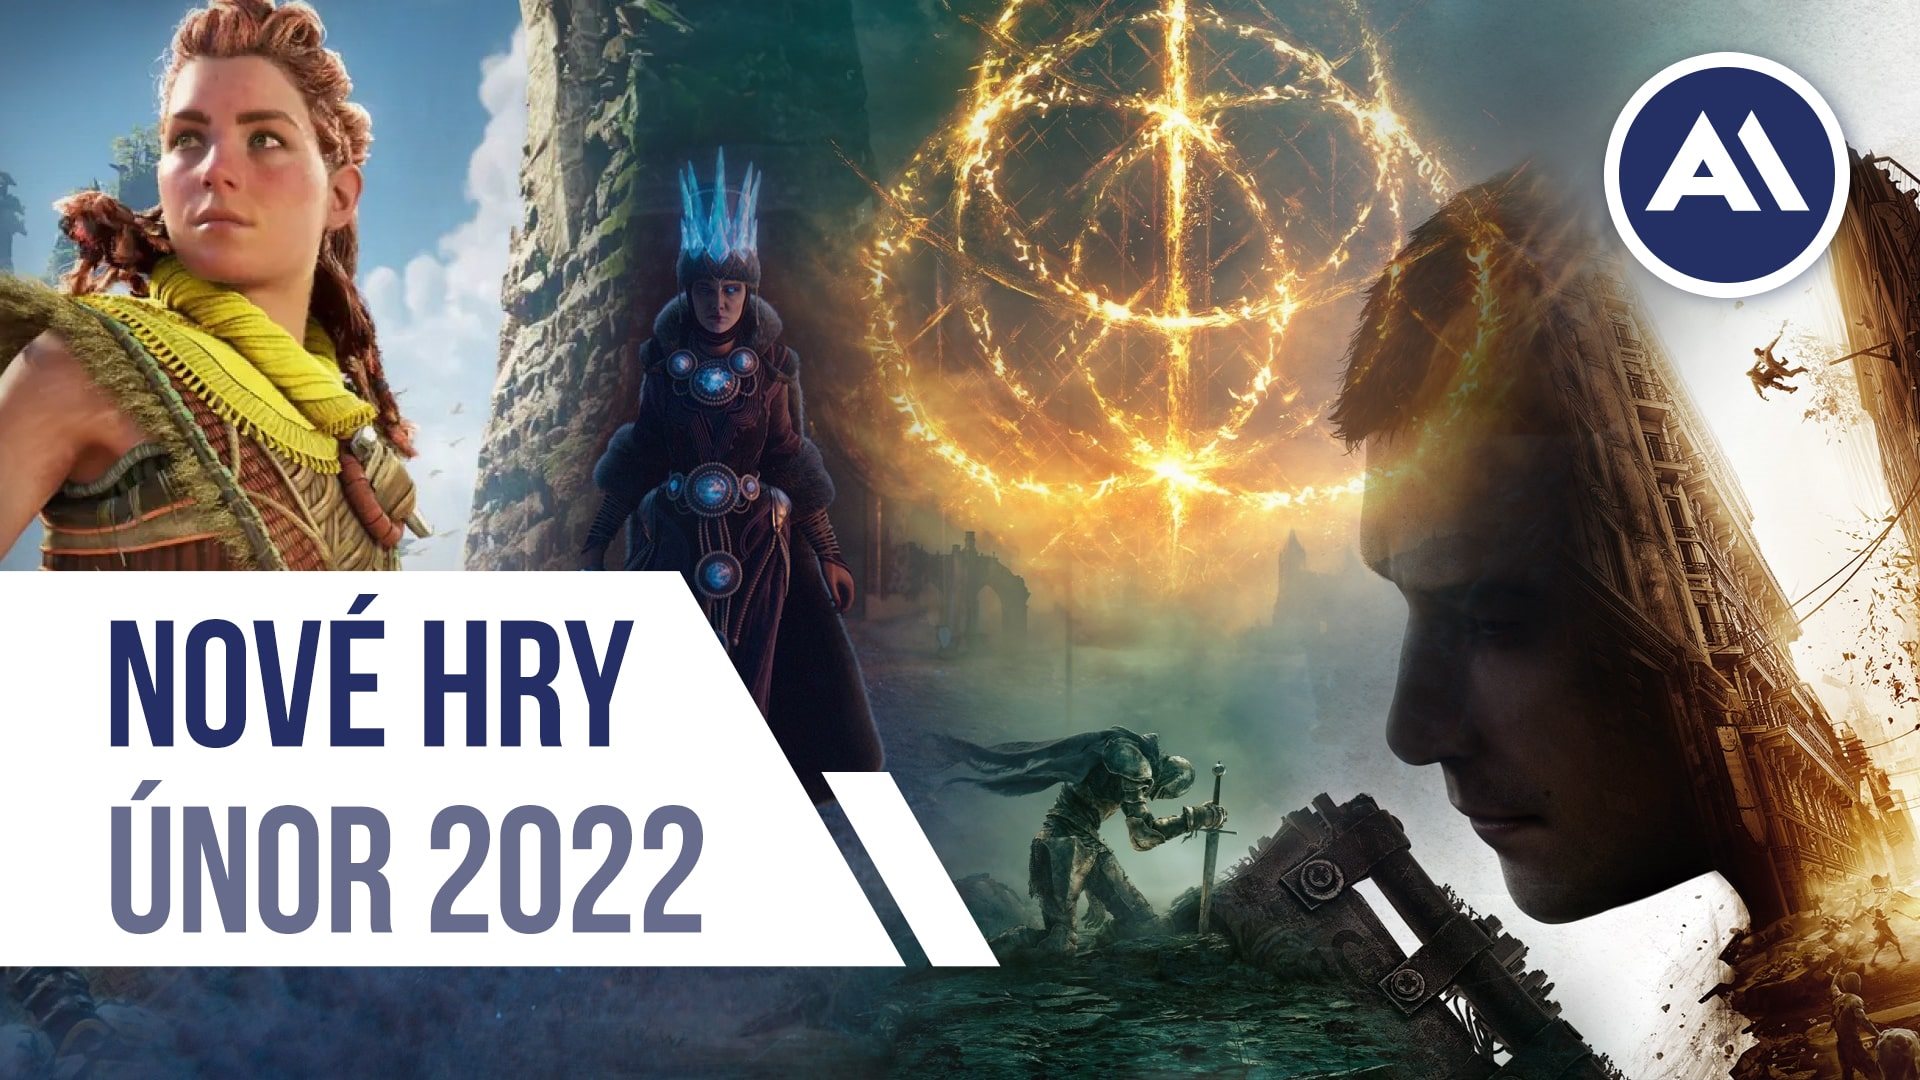 Nové hry: únor 2022 – Horizon Forbidden West, Elden Ring, Dying Light 2, Total War Warhammer 3